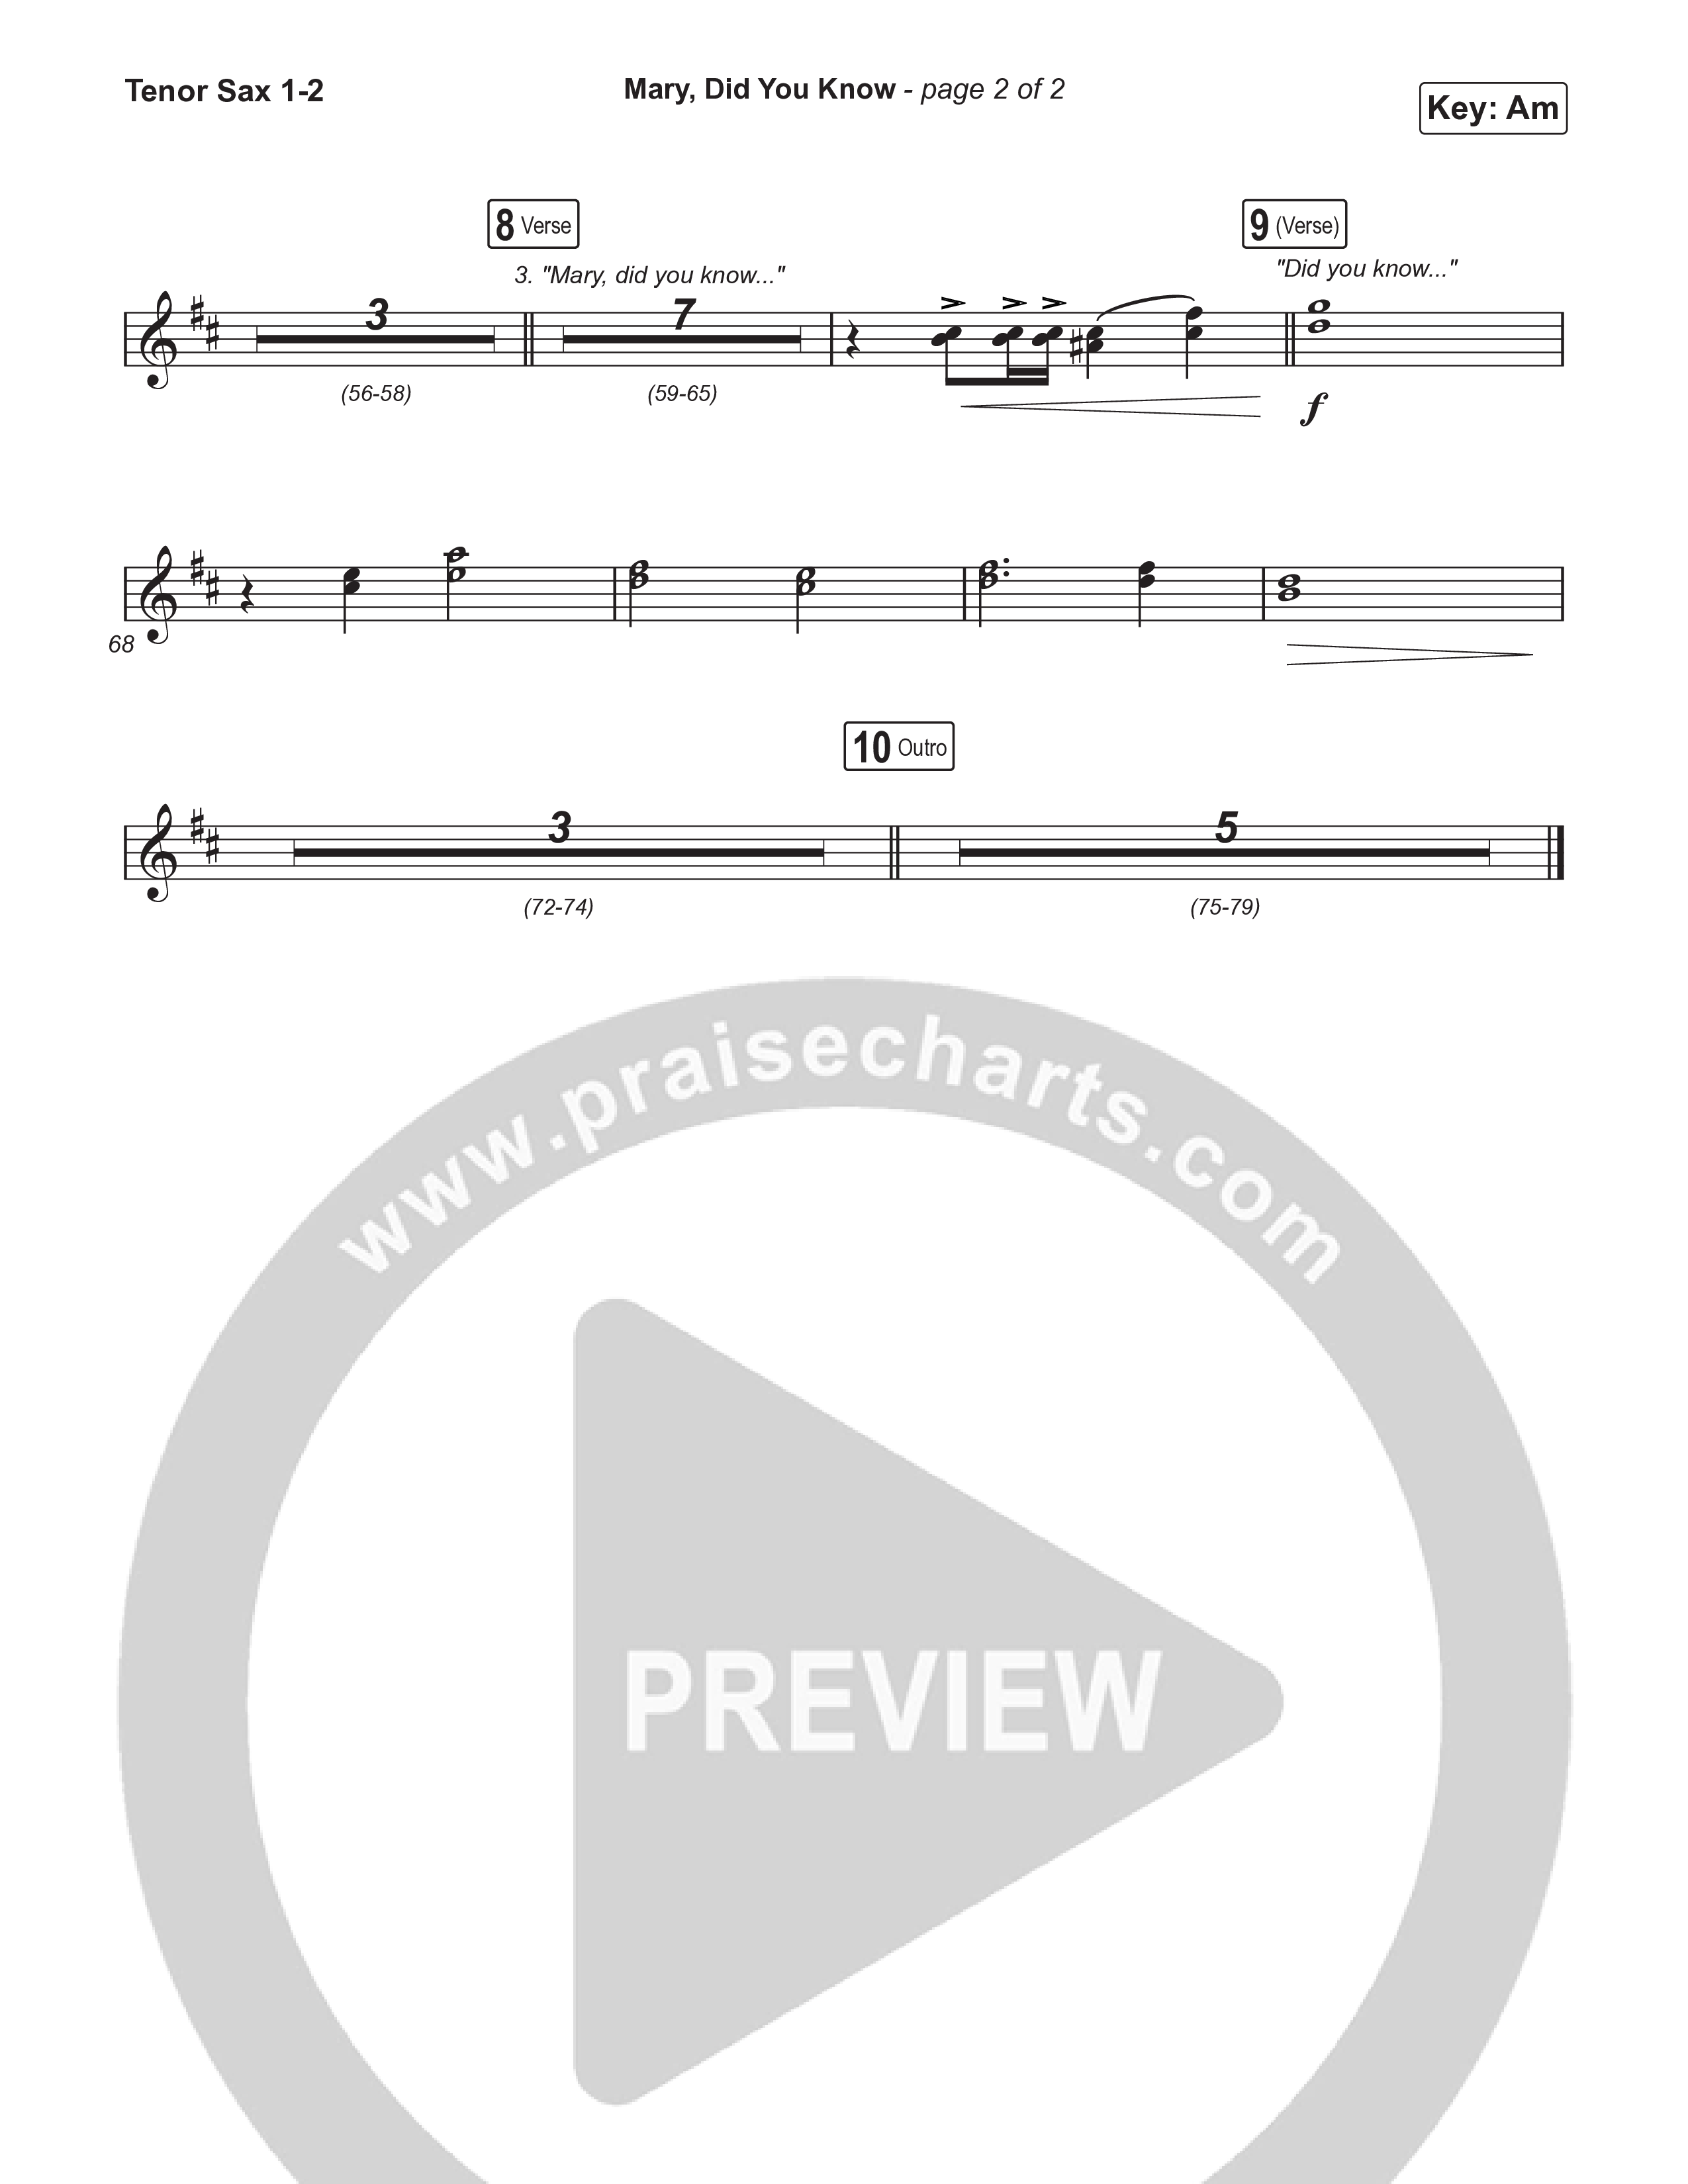 Mary Did You Know (Worship Choir SAB) Tenor Sax 1/2 (Anne Wilson / Arr. Luke Gambill)